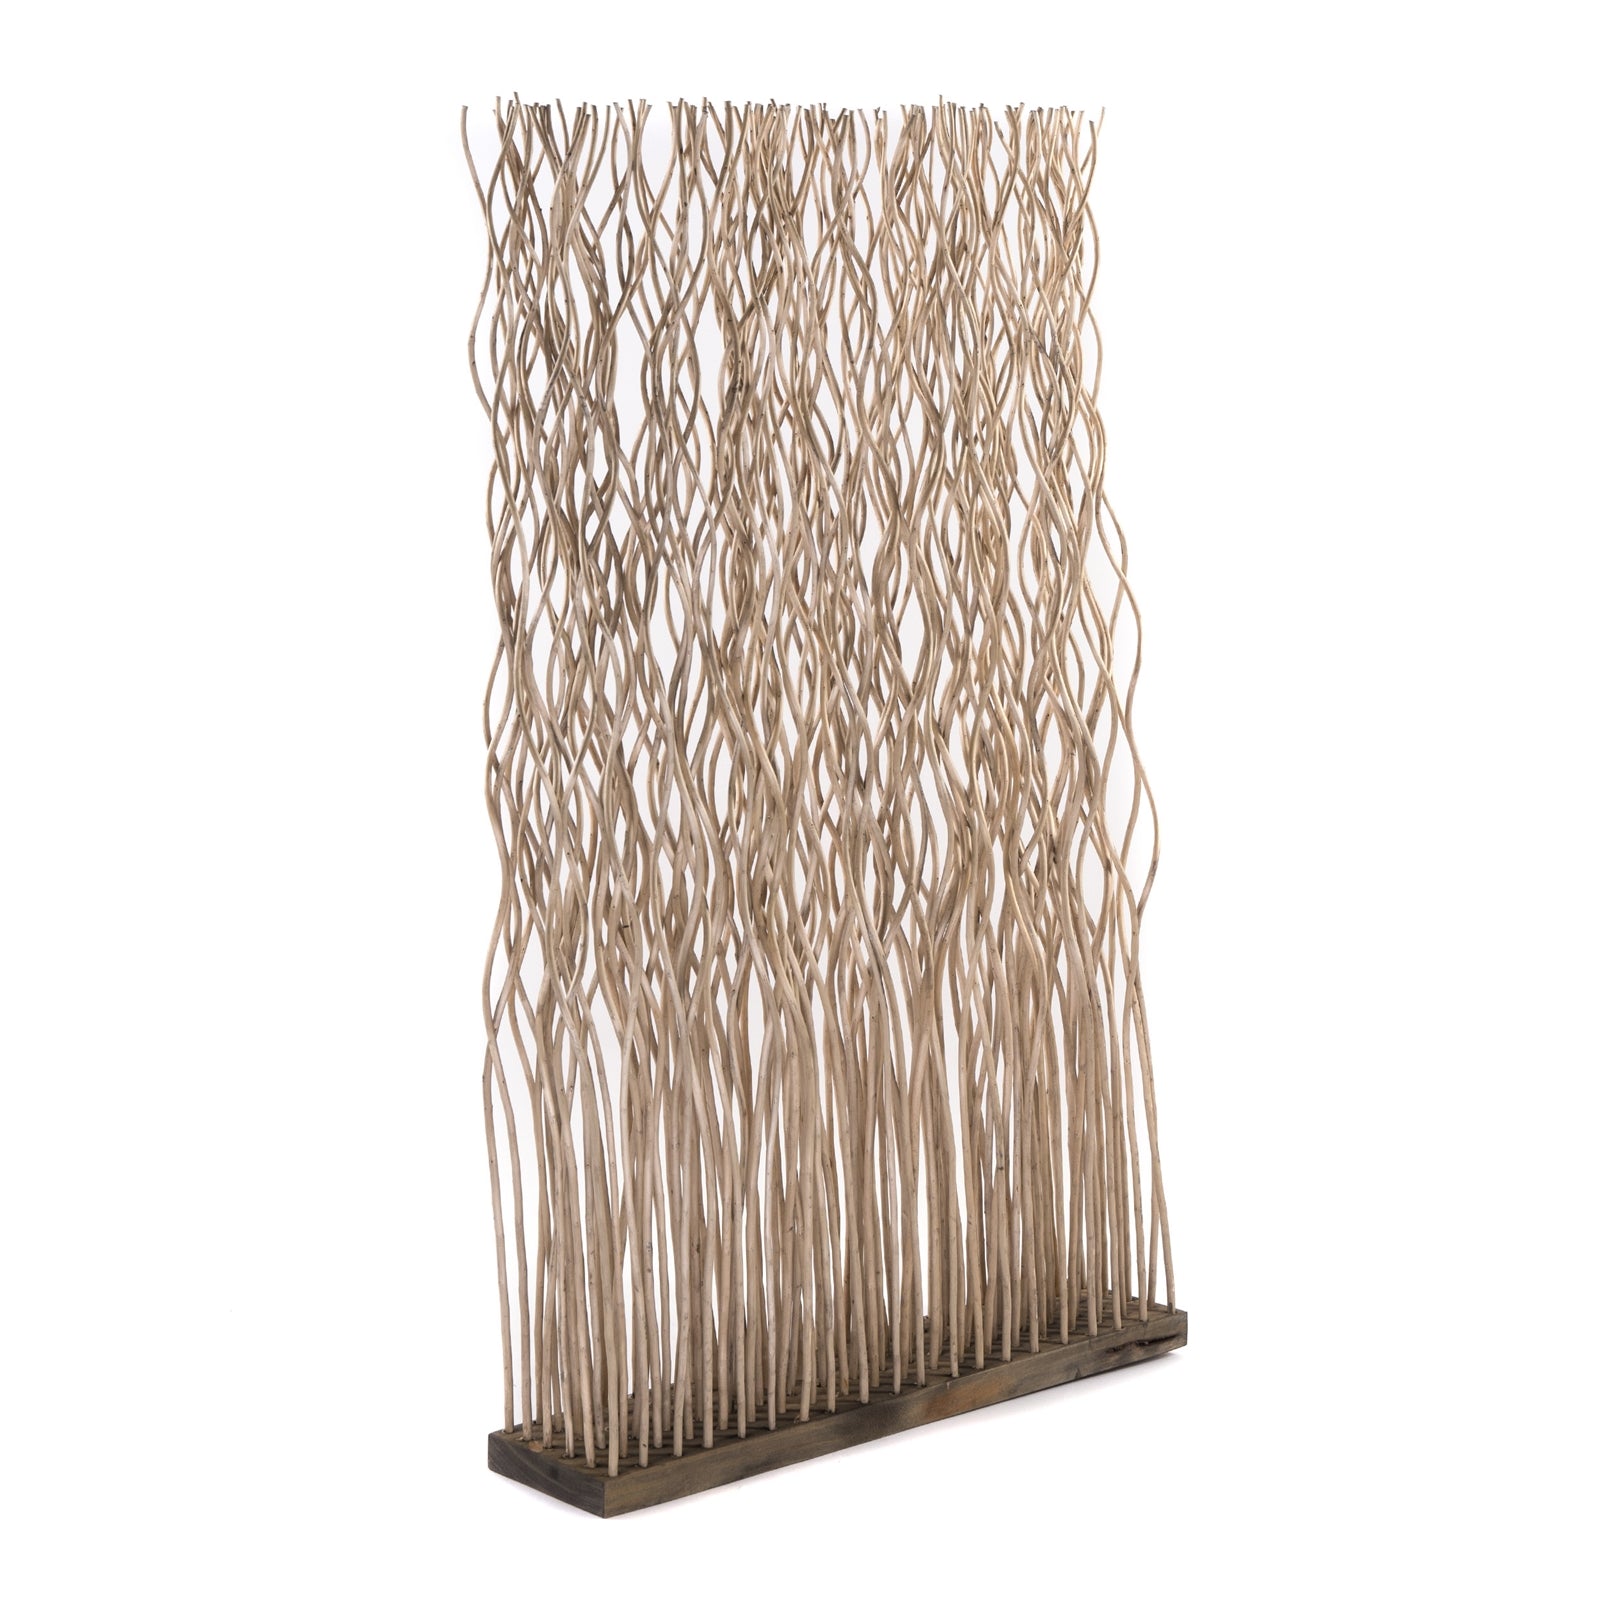 RAUMTEILER "KINKI" | Weidenholz, 110x70 cm | Zweige Paravent